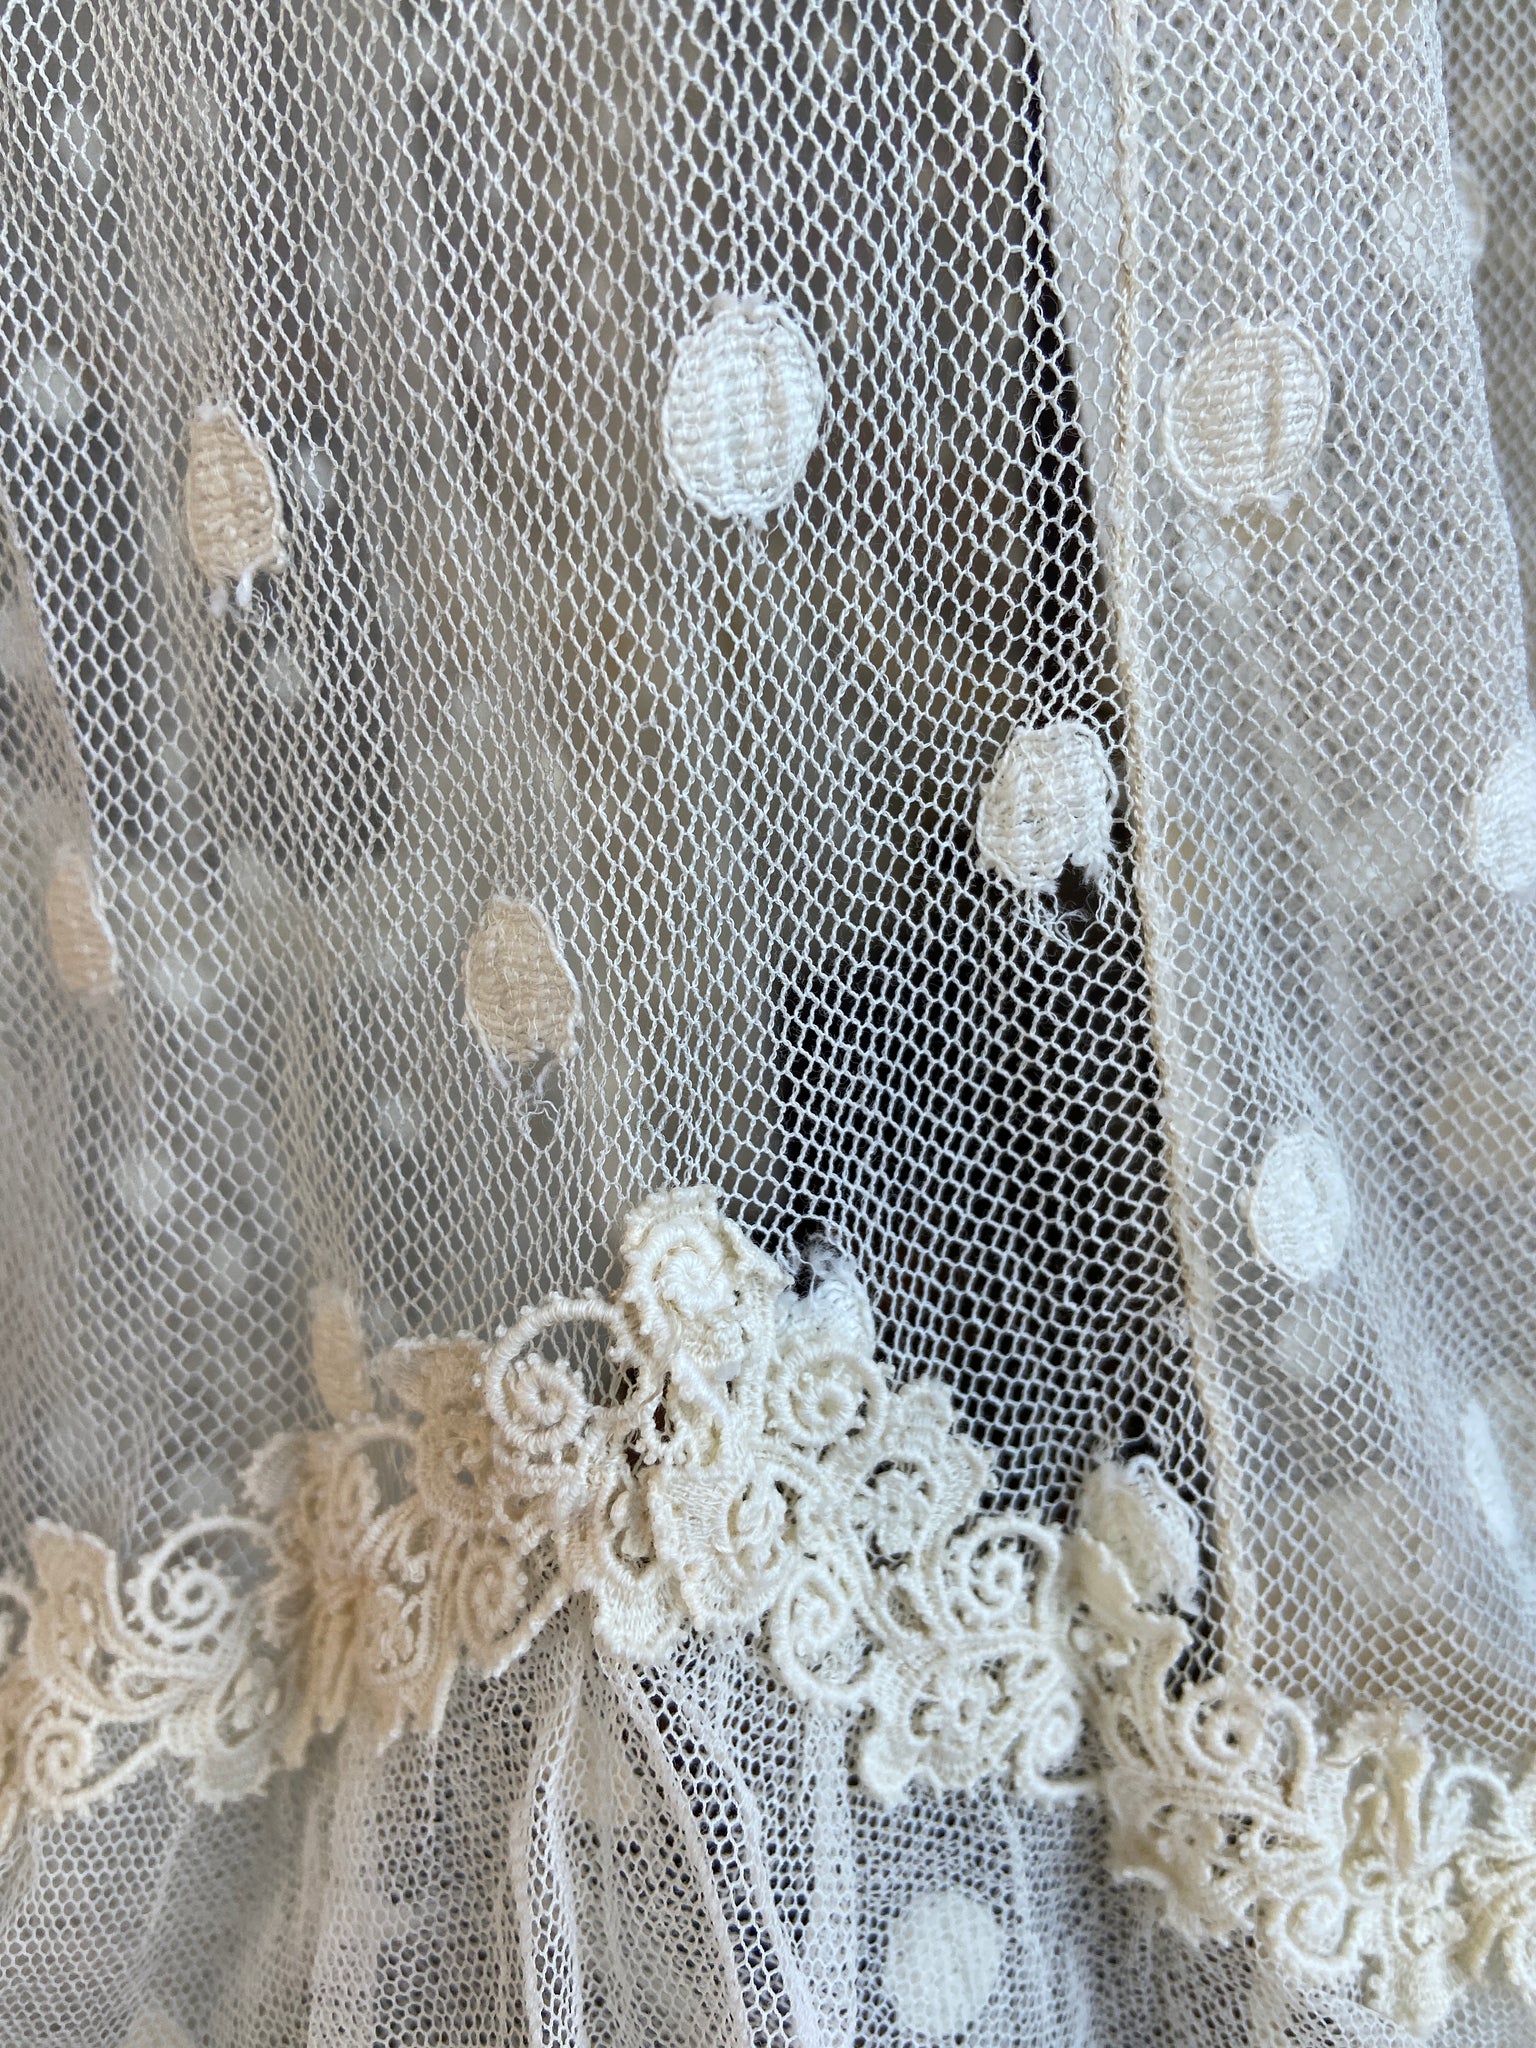 Edwardian Polka Dot Net Lace Dress